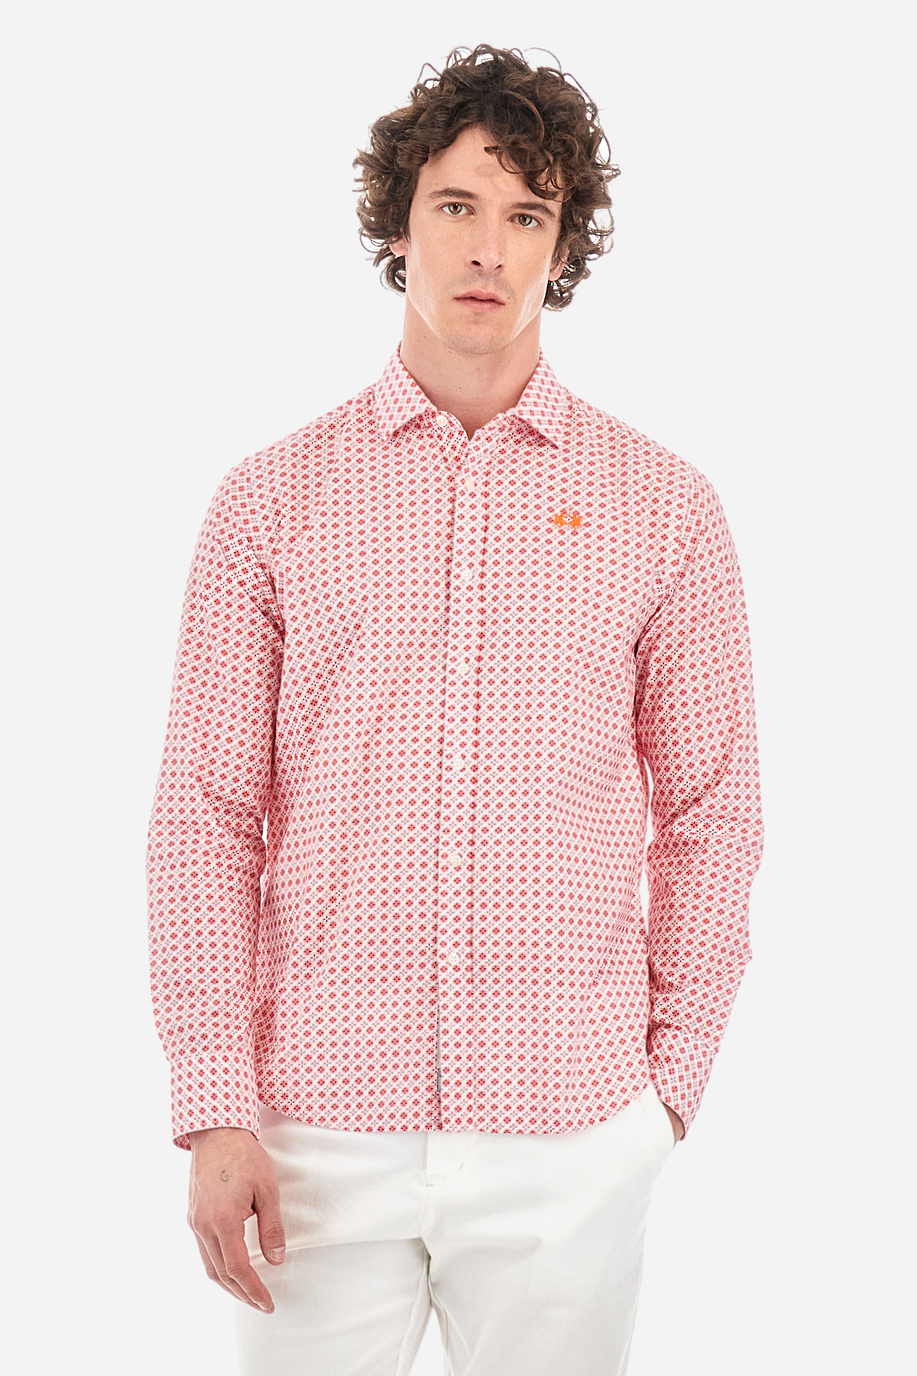 Popeline-Hemd mit geometrischem Muster – Innocent - Hemden | La Martina - Official Online Shop